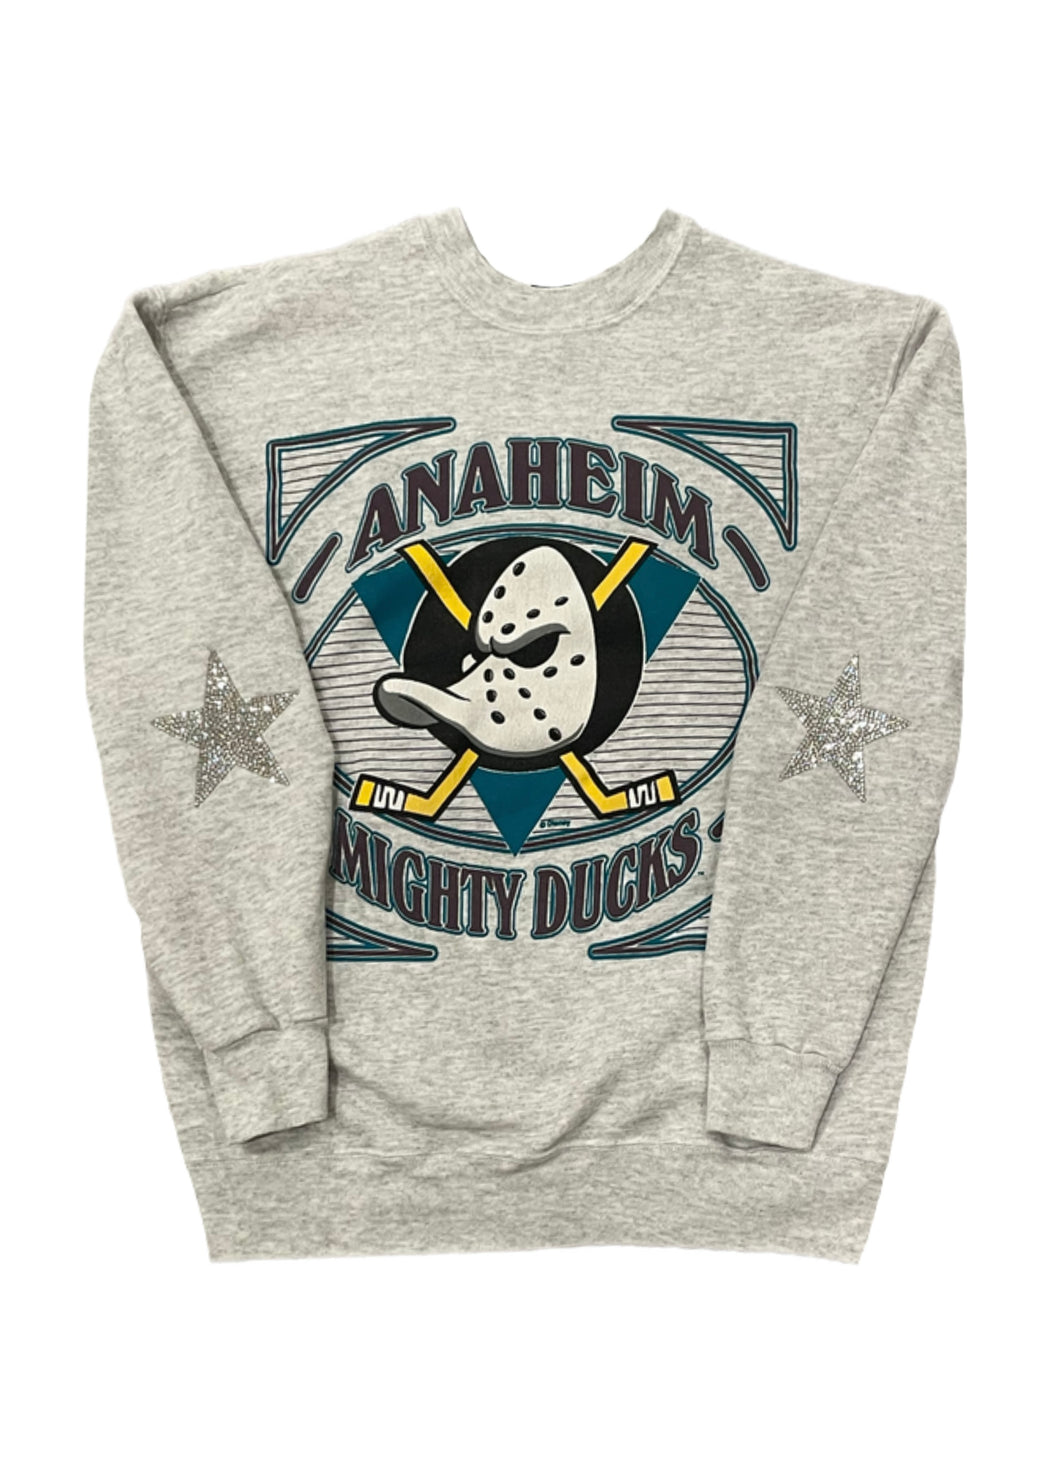 Anaheim Ducks, NHL One of a KIND Vintage “Mighty Ducks” Rare Find Sweatshirt with Crystal Star Design - Size: S/M